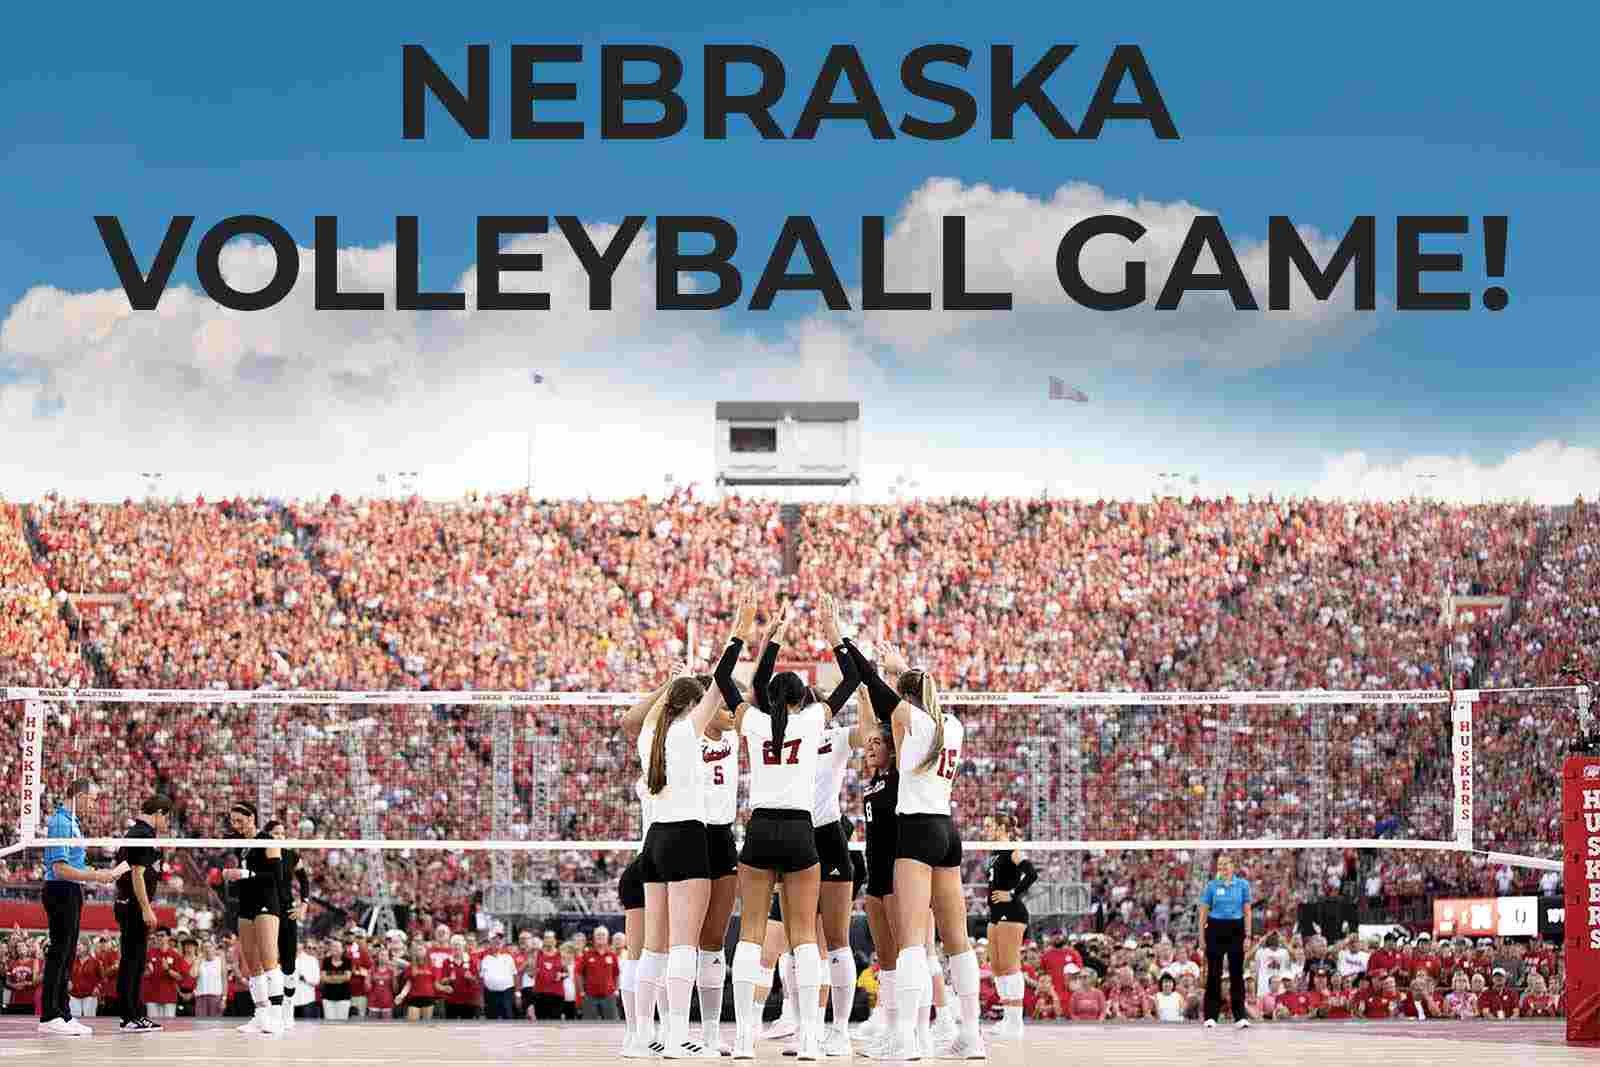 Nebraska Volleyball Game.